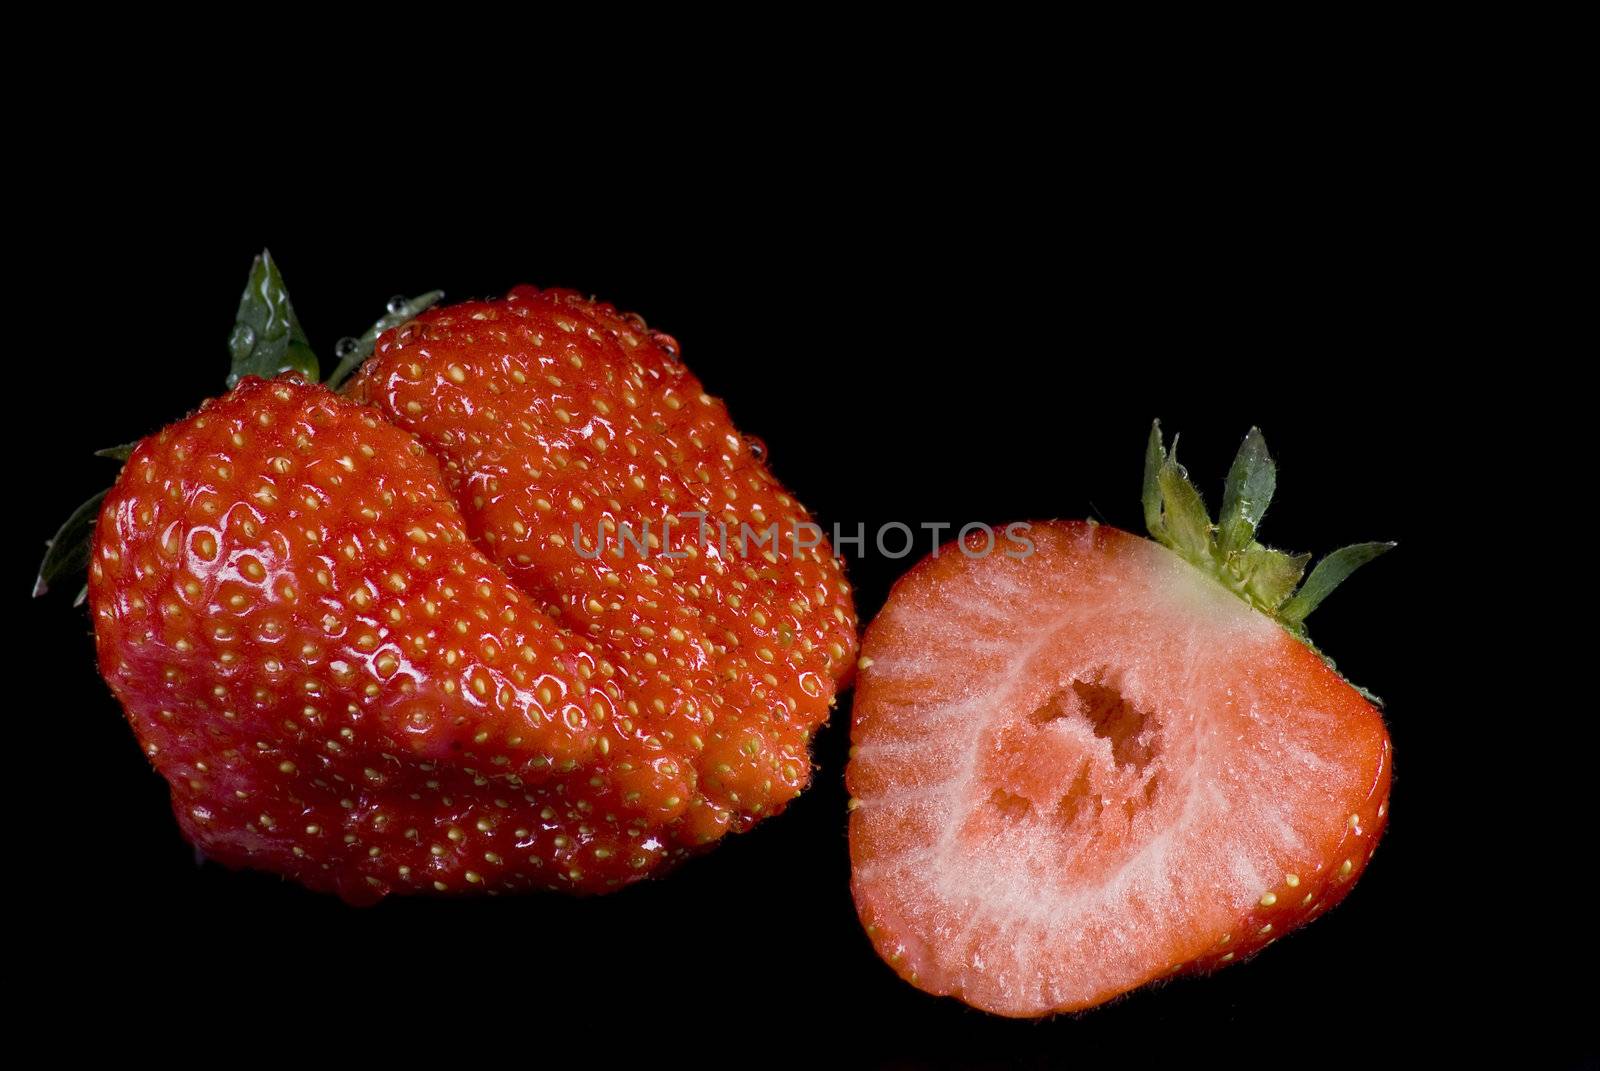 Strawberries by caldix